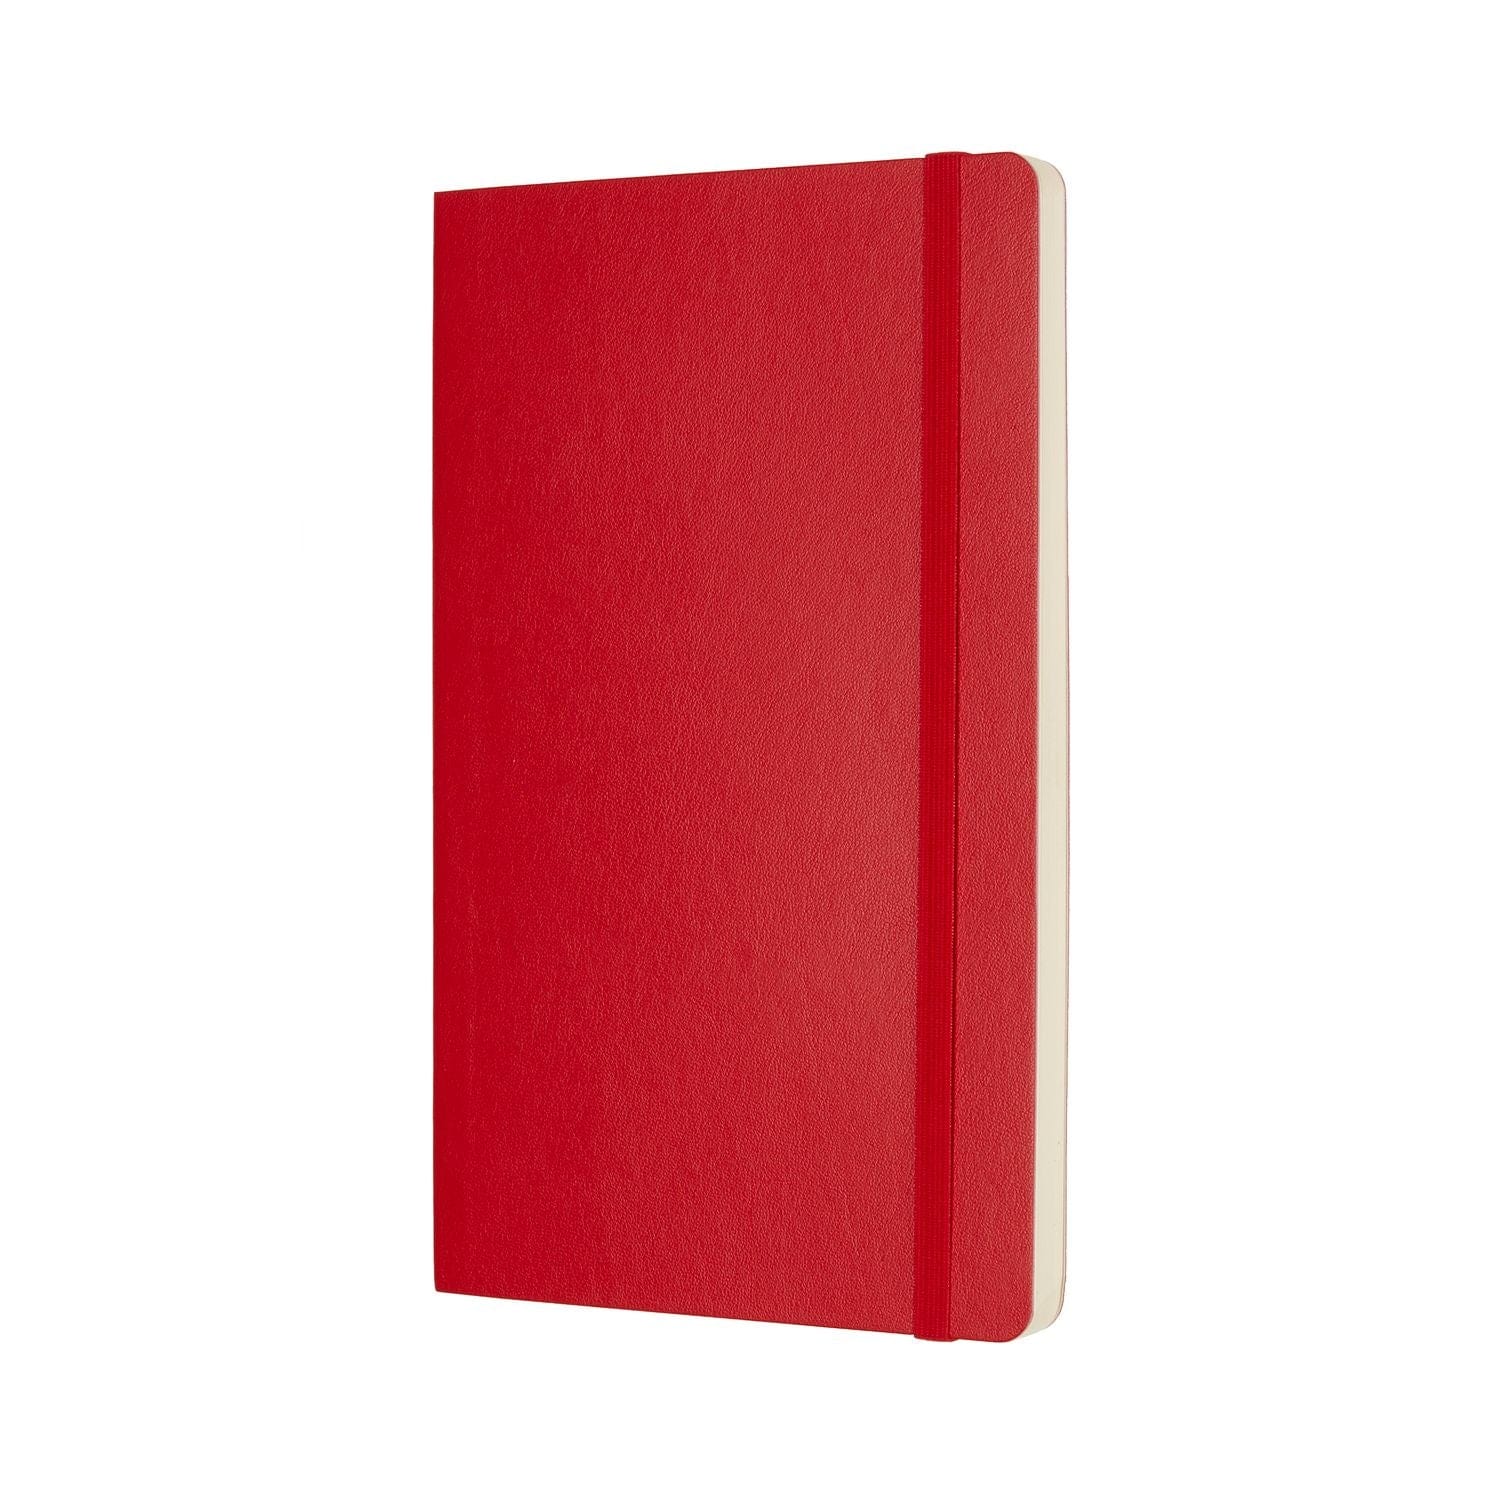 Moleskine Notebook Large Plain Scarlet Red Soft Cover